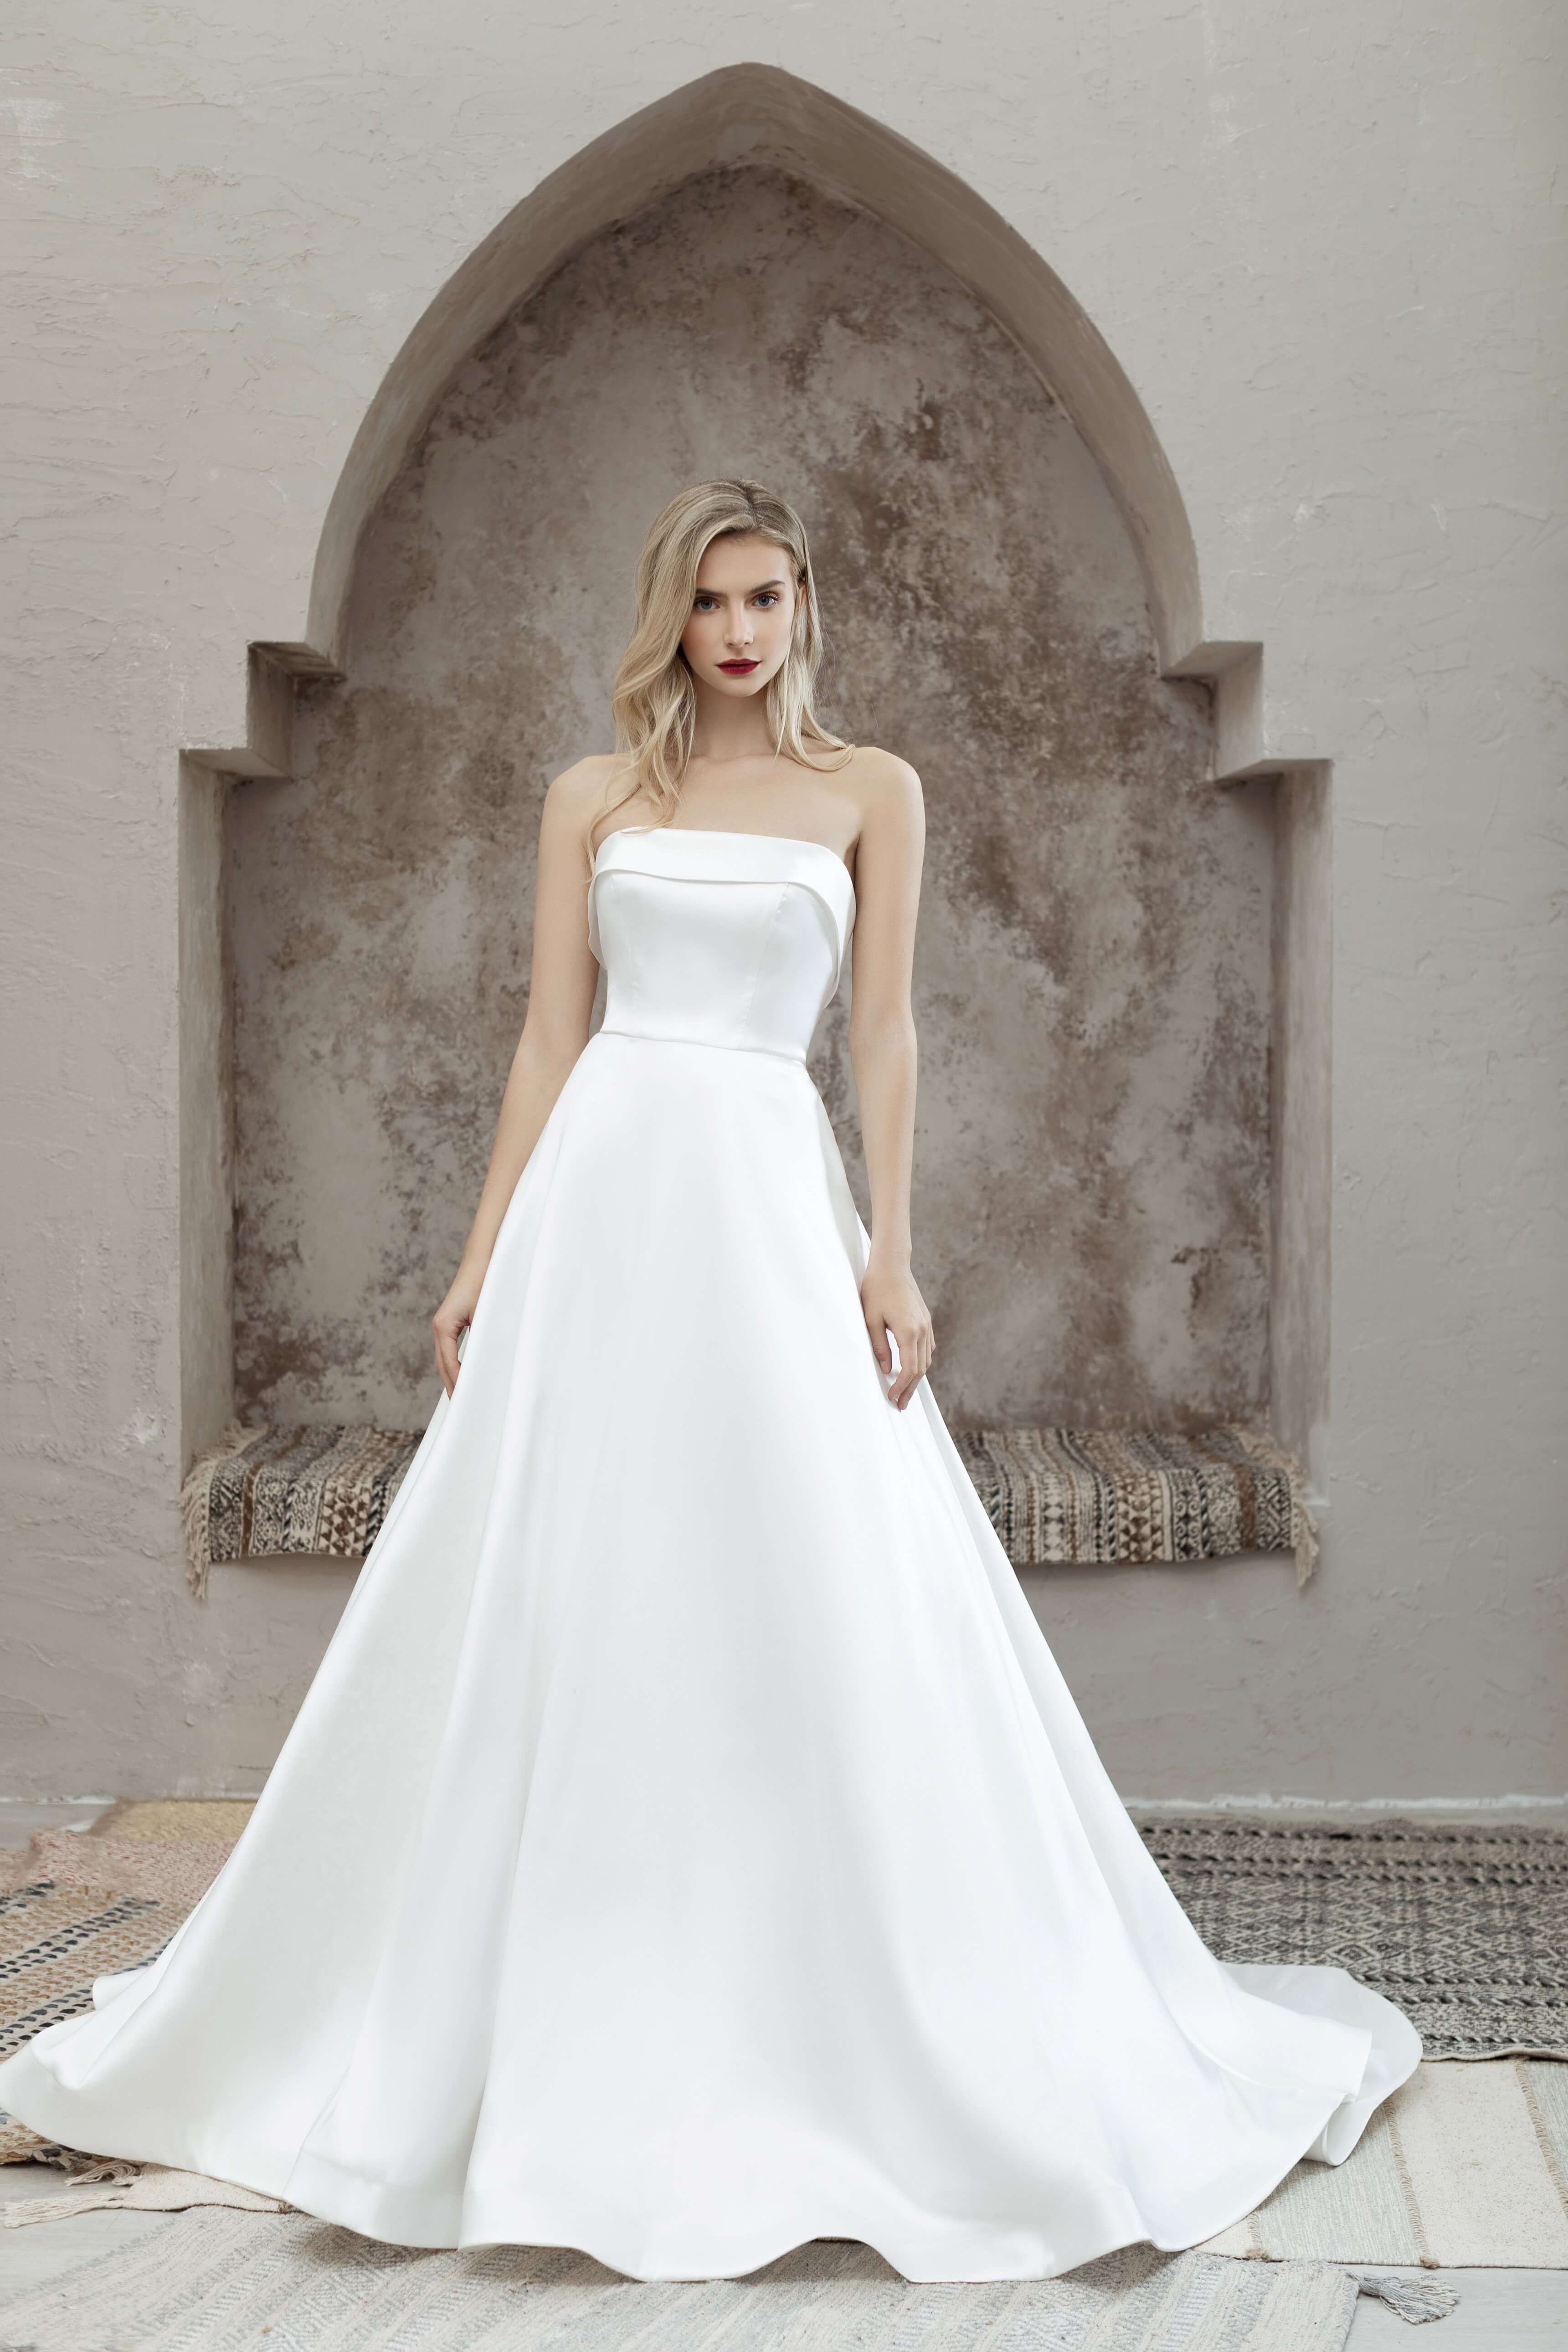 white aline dress